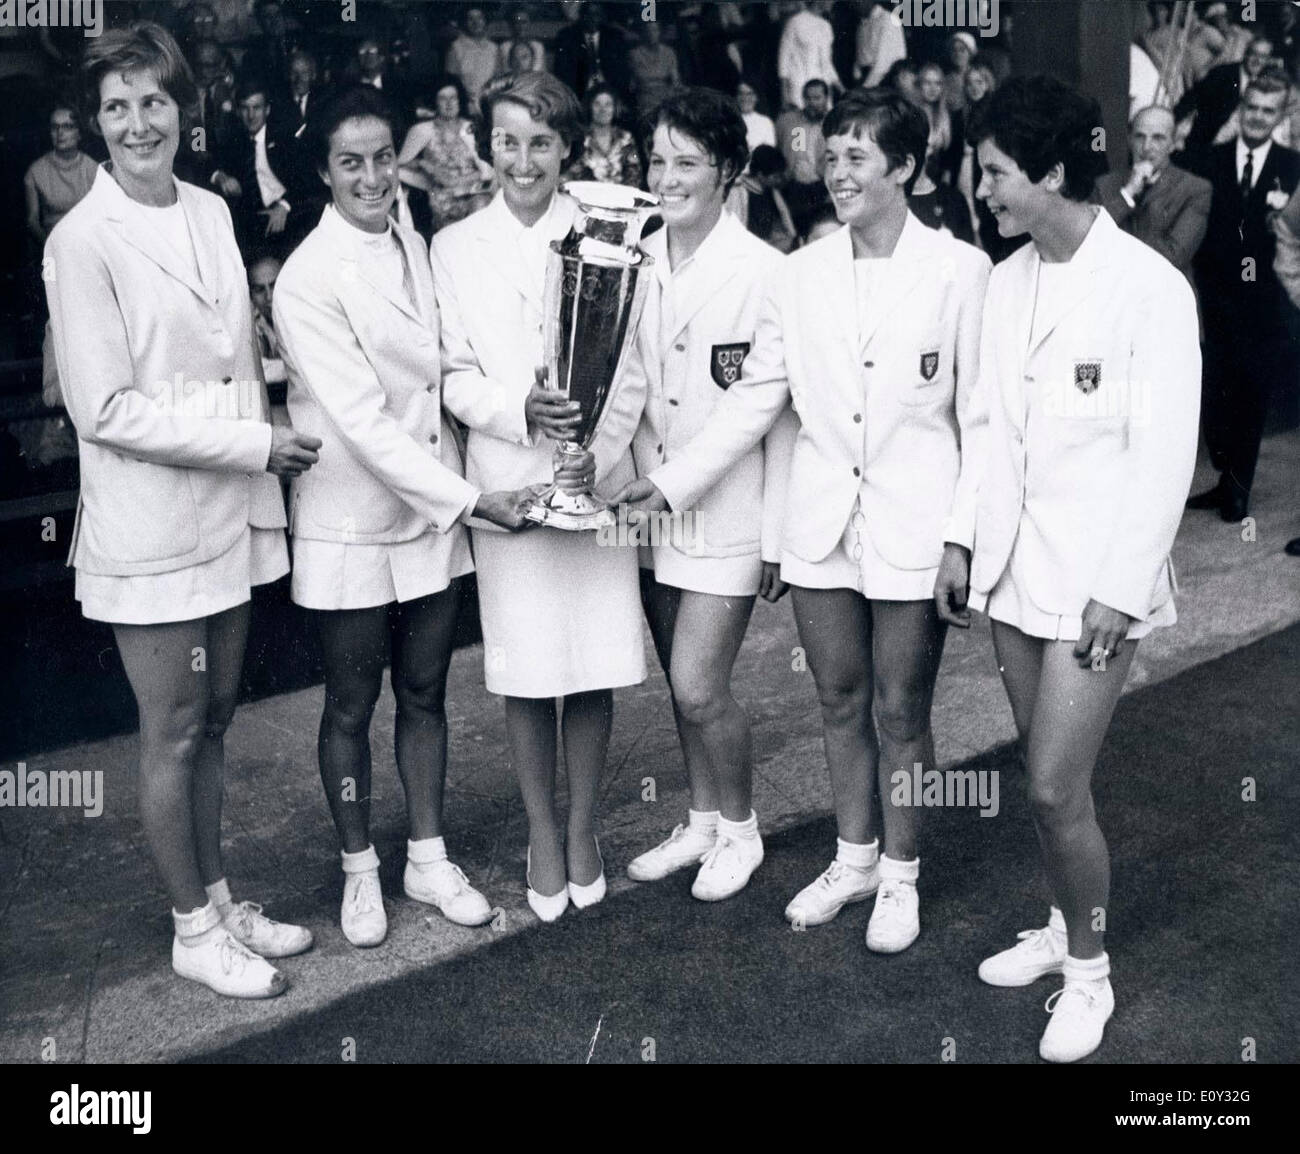 Jun 16, 1968 - London, England, United Kingdom - CHRISTINE JANES (L); VIRGINIA WADE, ANGELA BARRETT, NEIL TRUMAN, WINNE SHAW, and JOYCE WILLIAMS are the winners of the Wightman Cup at Wimbledon. Stock Photo